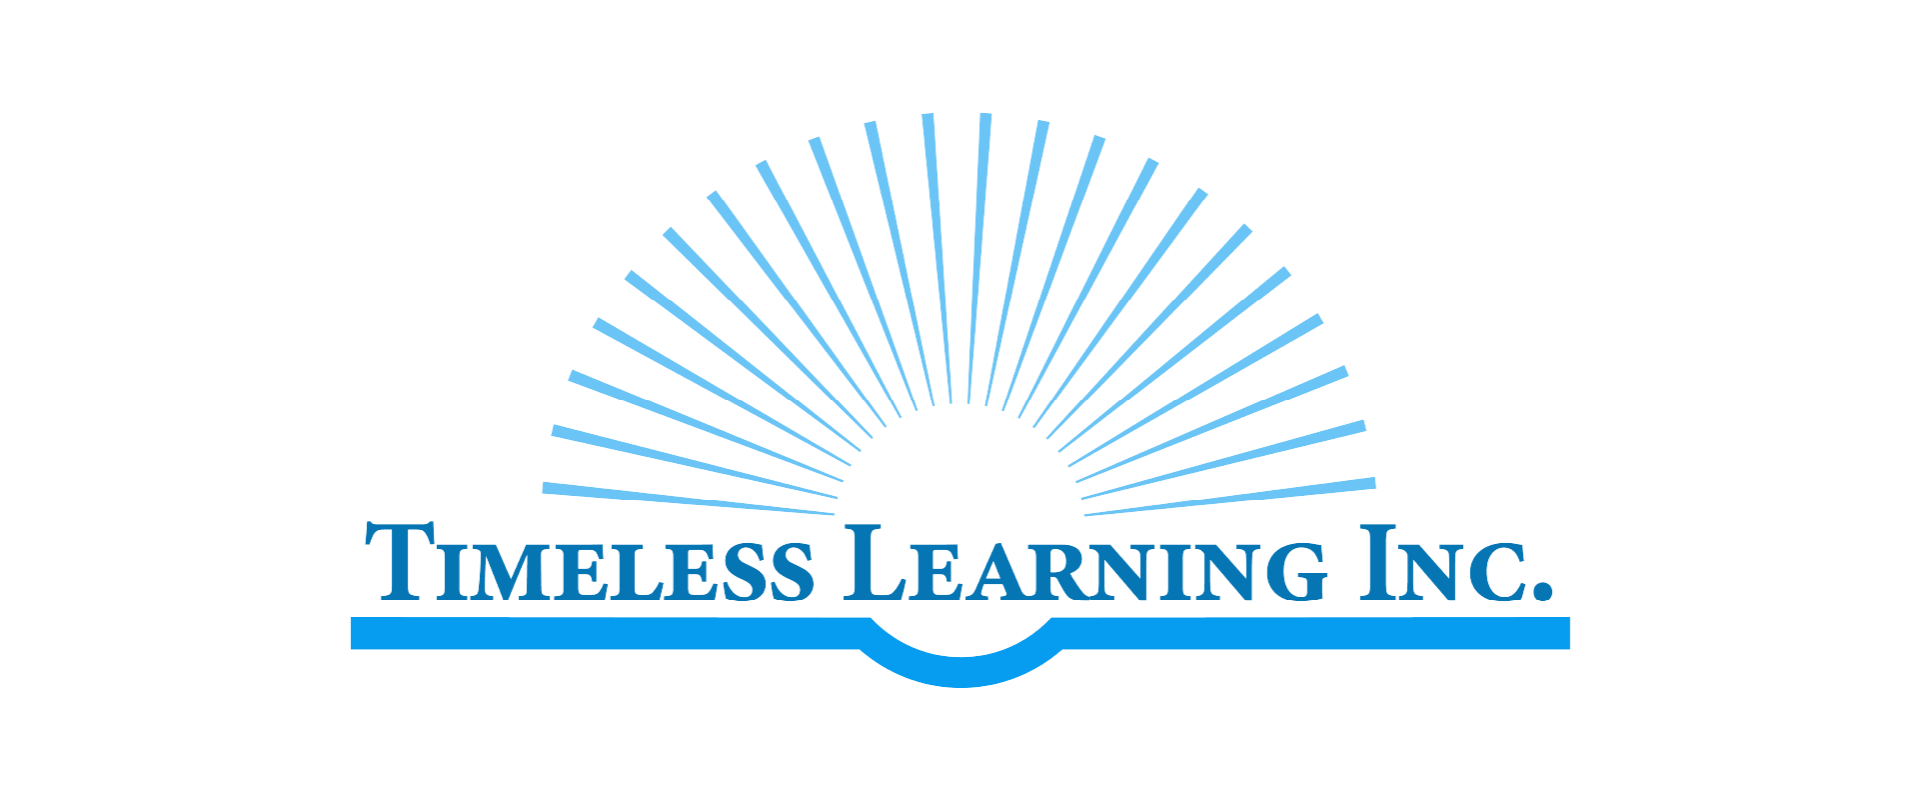 Timeless Learning, Inc. logo.